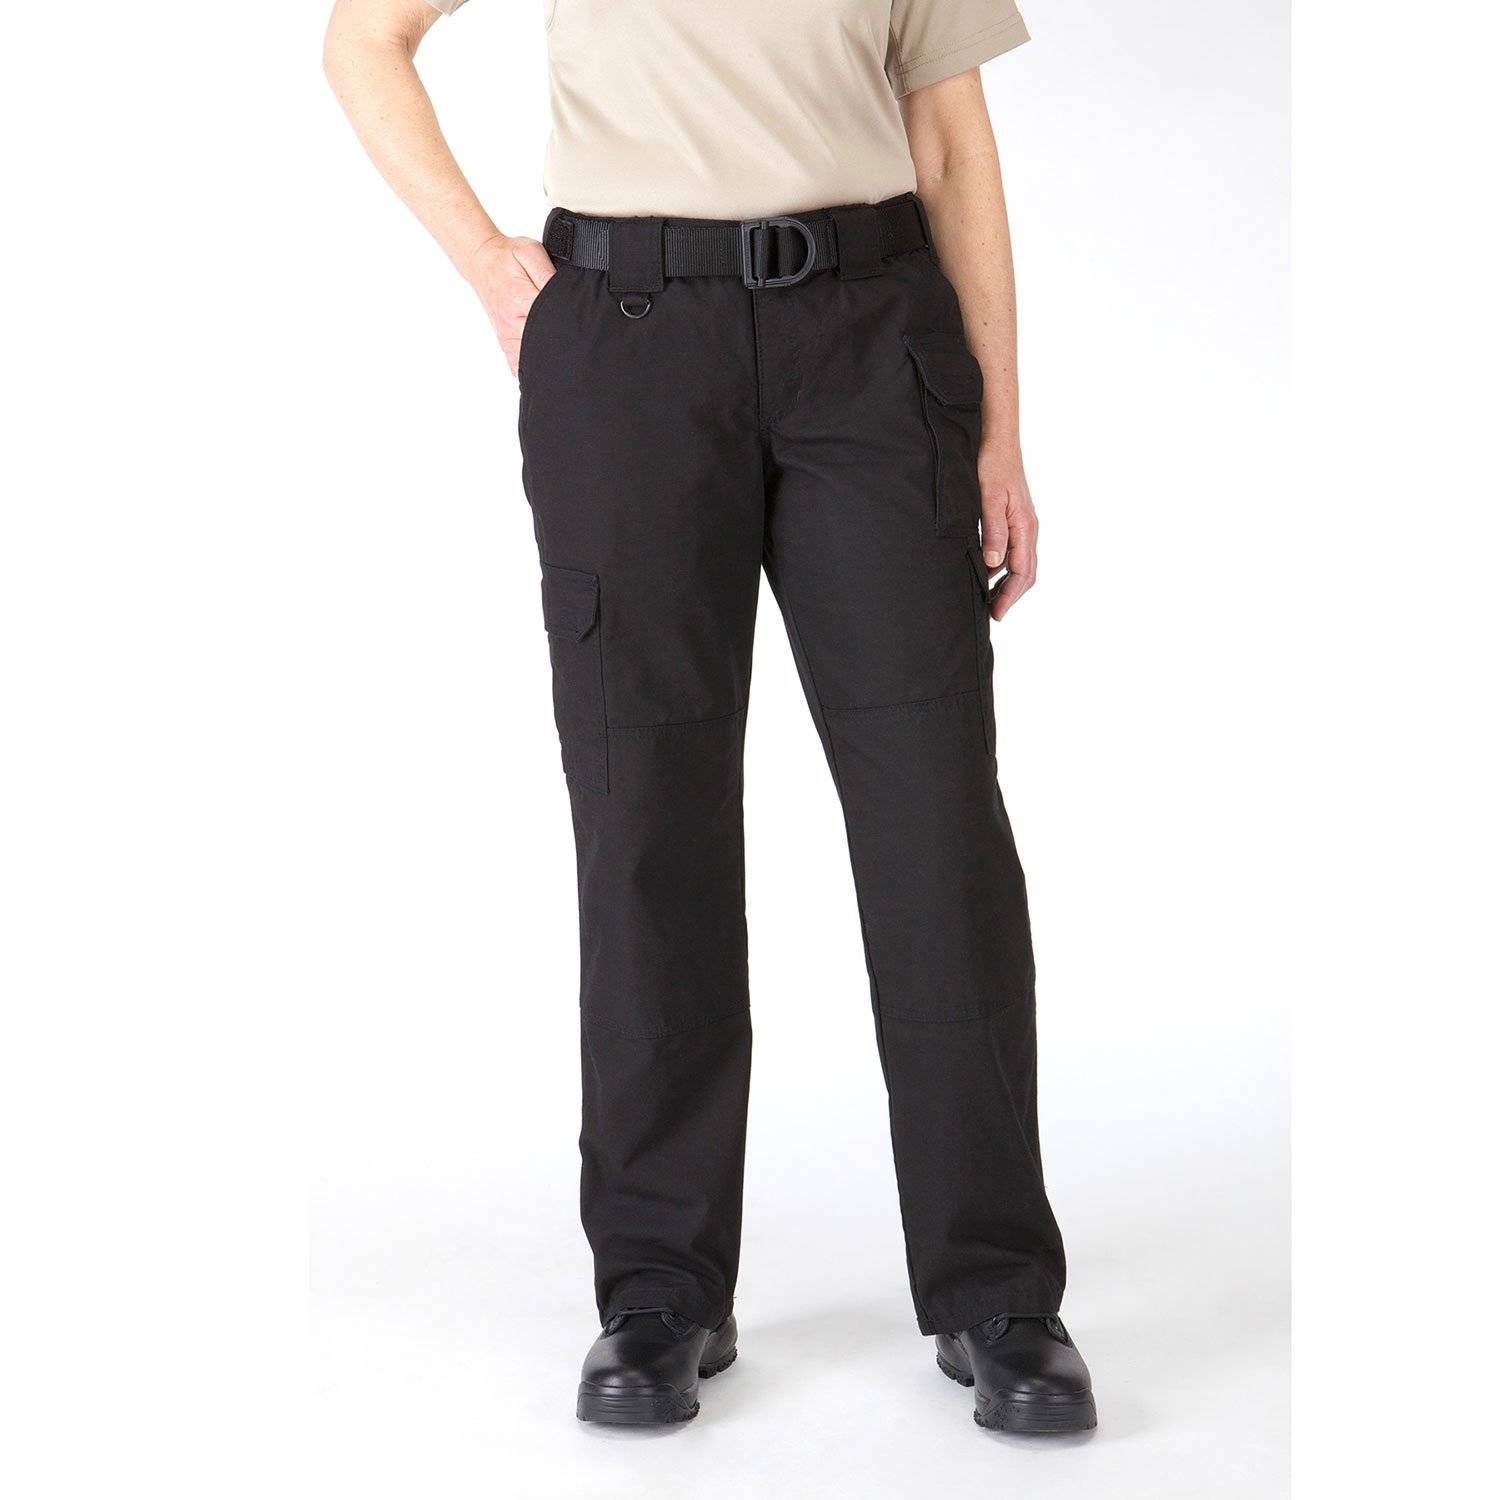 Women's EMS Pants, Tactical Performance & Comfort